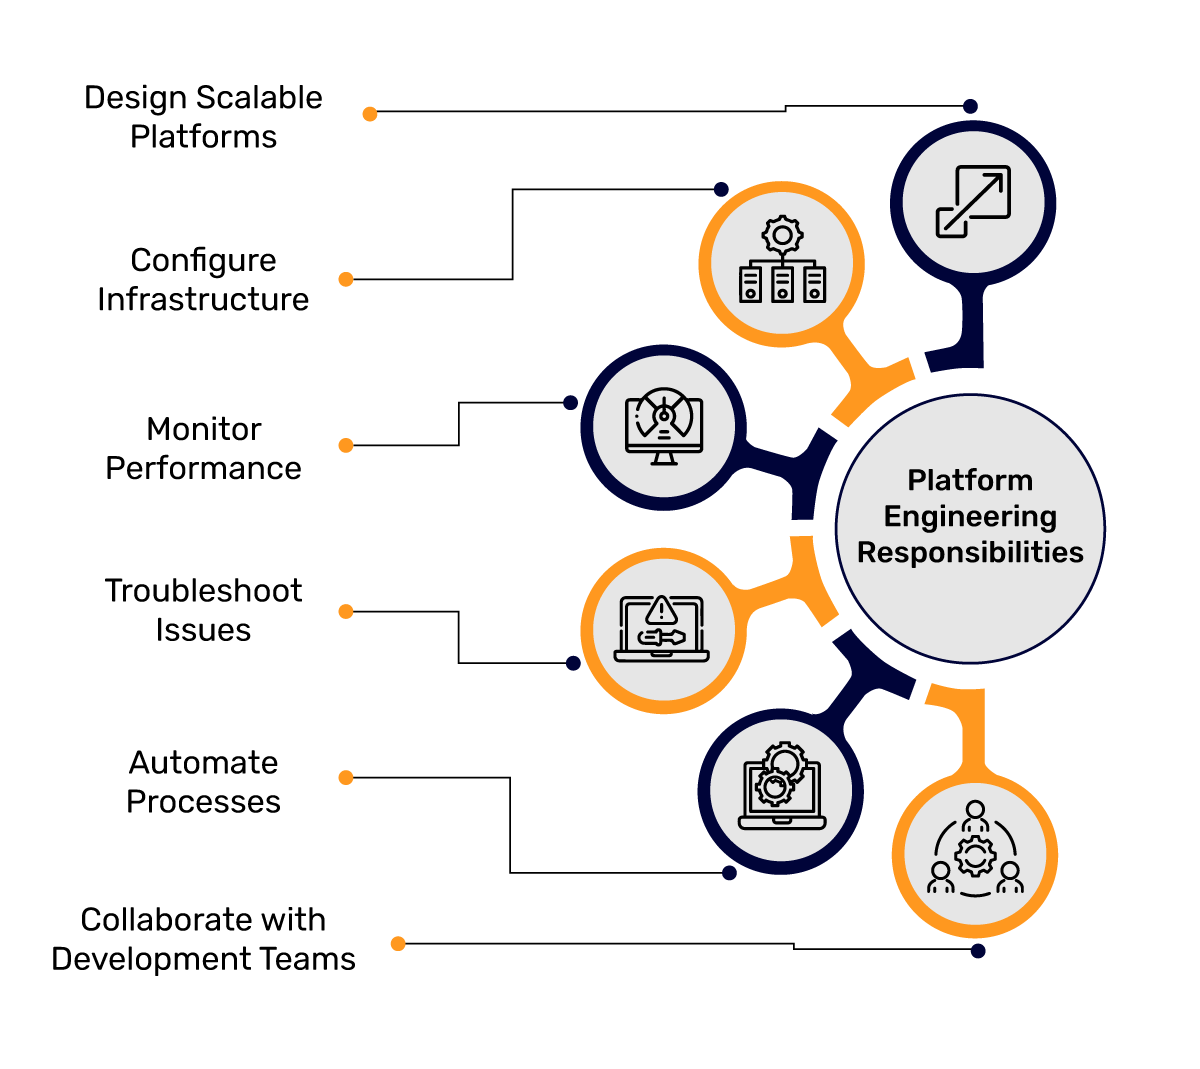 Platform Engineering Responsibilities